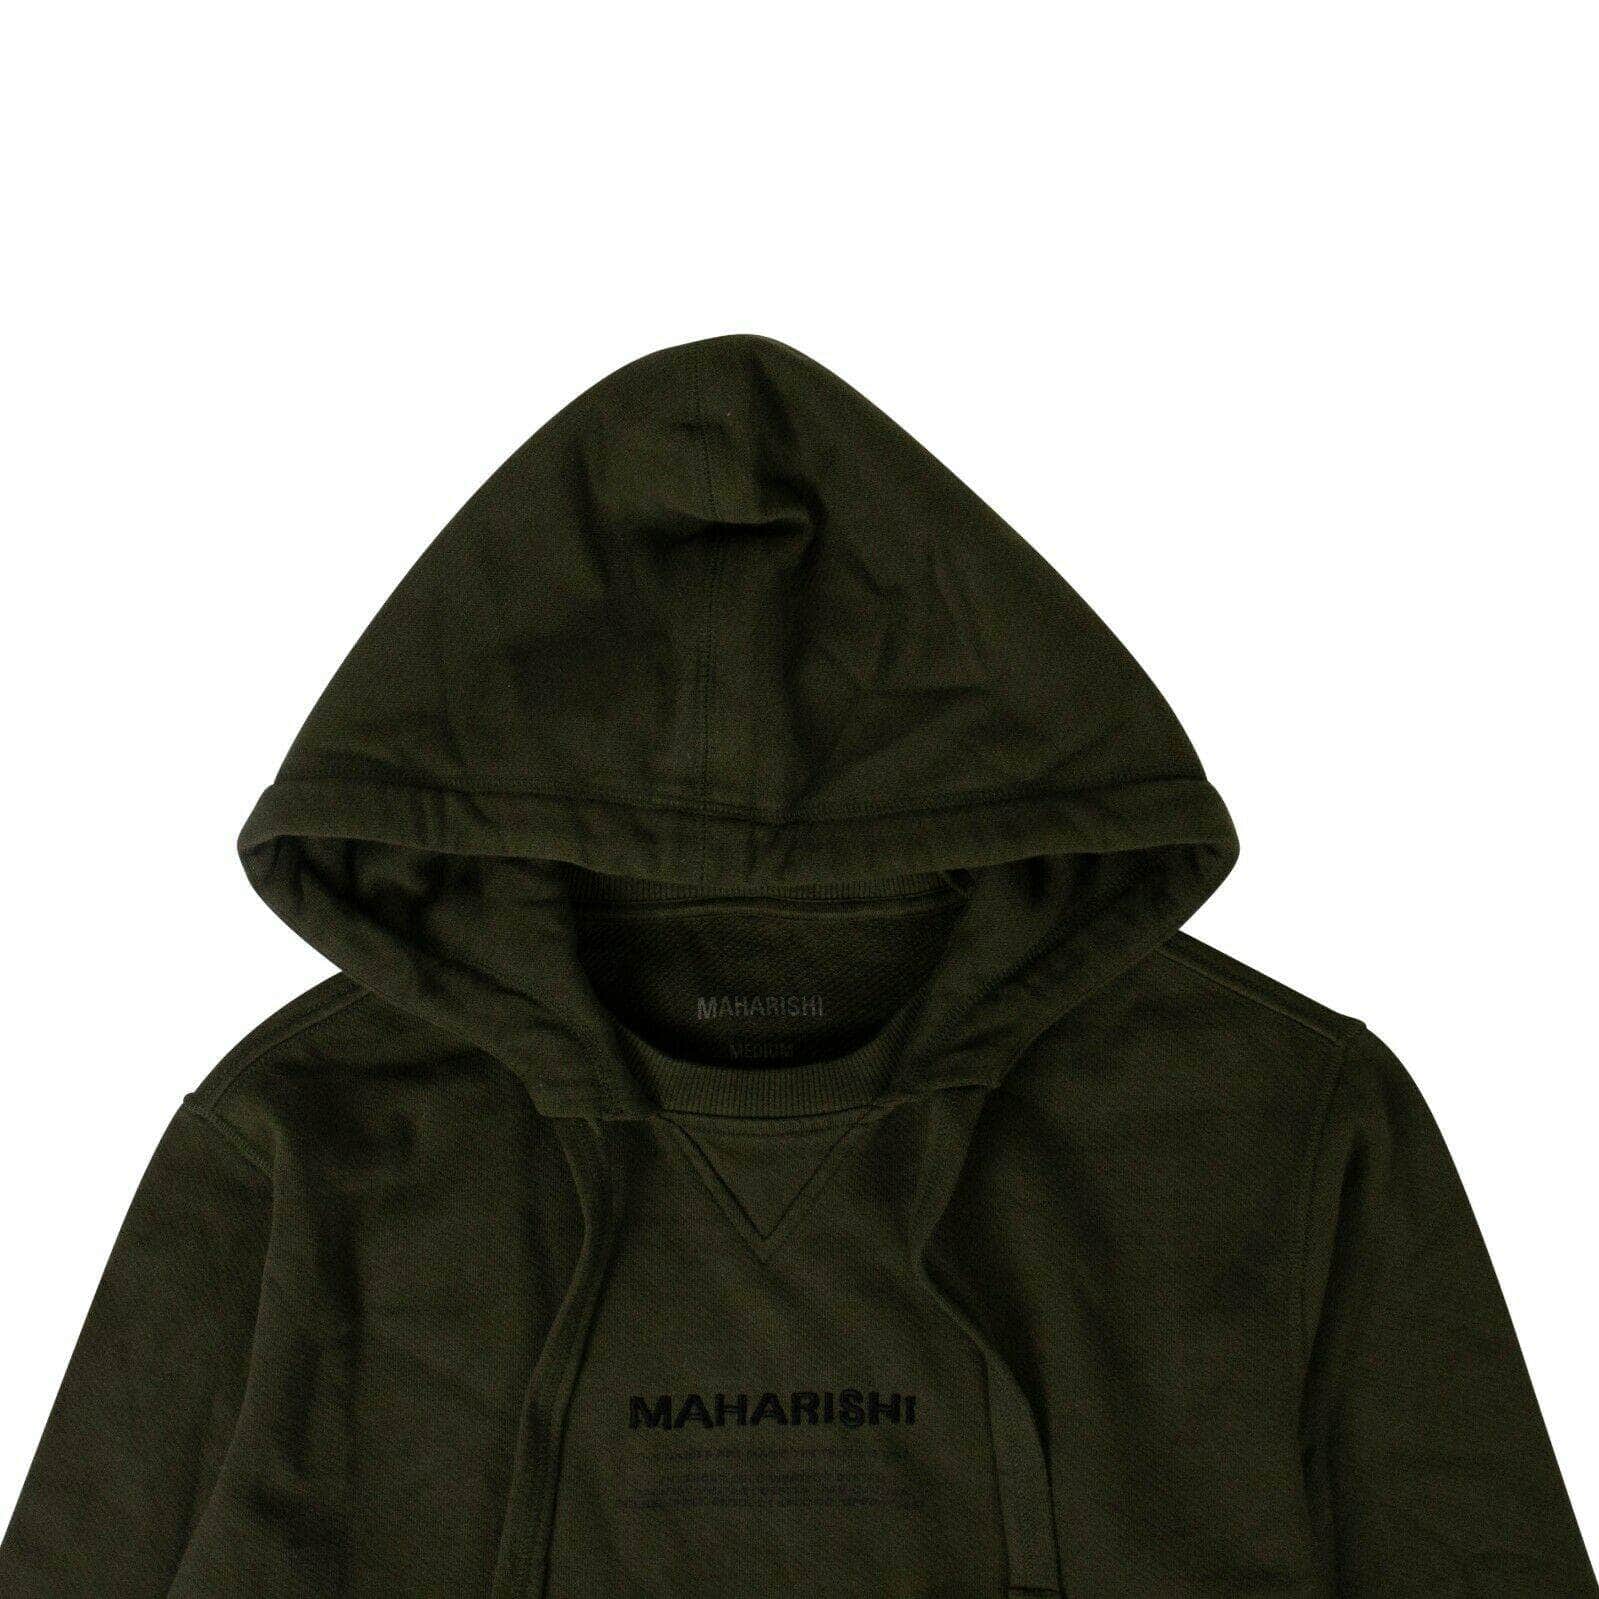 MAHARISHI Men's Sweatshirts S Organic Cotton Miltype Hooded Sweatshirt - Olive Green 80ST-MR-1179/S 80ST-MR-1179/S